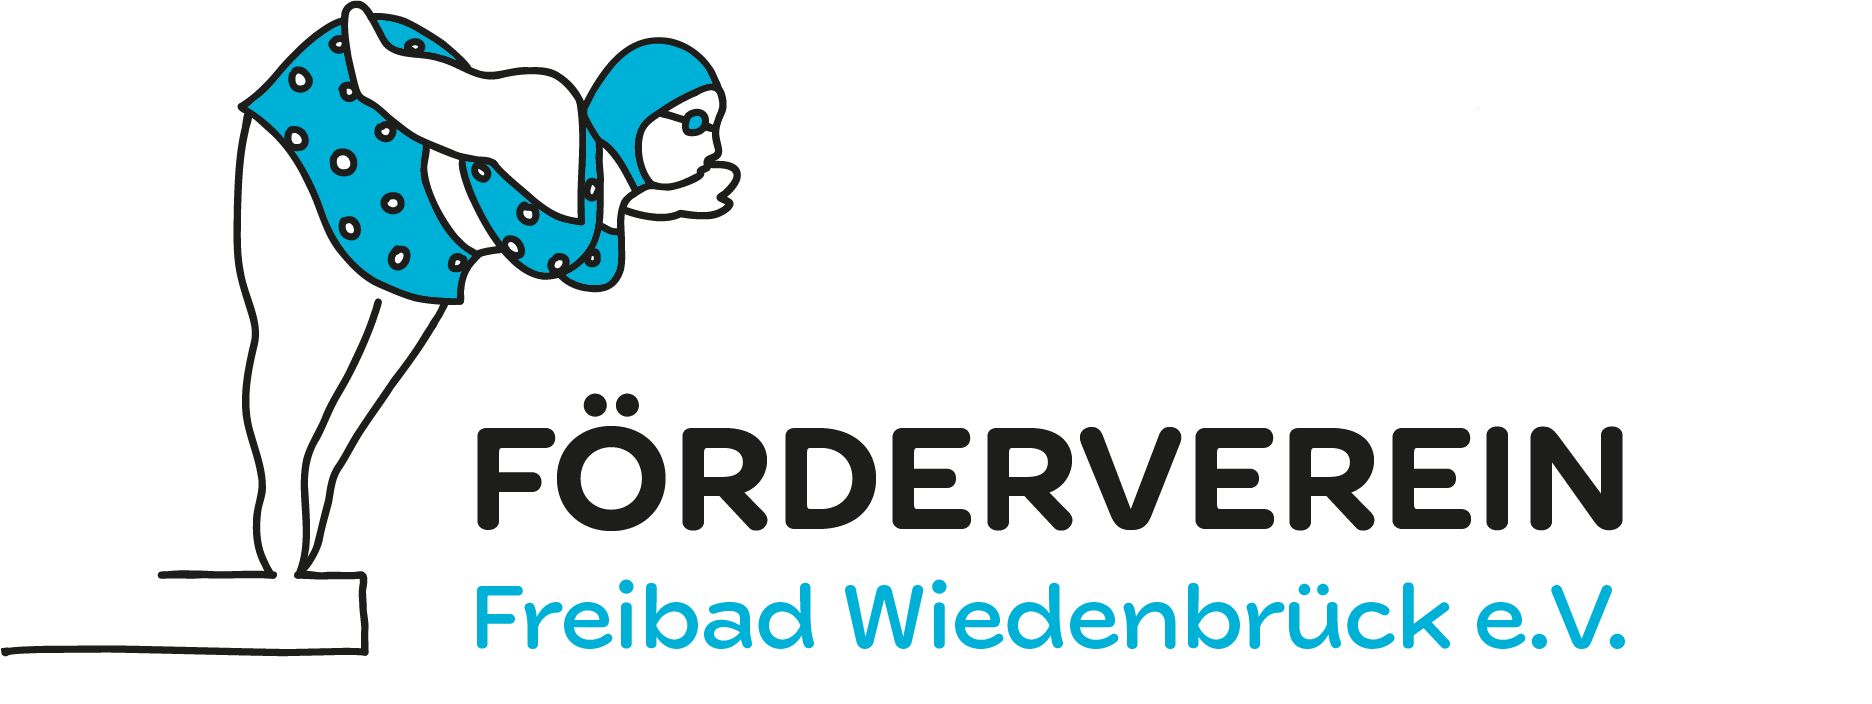 Förderverein Freibad Wiedenbrück e.V.